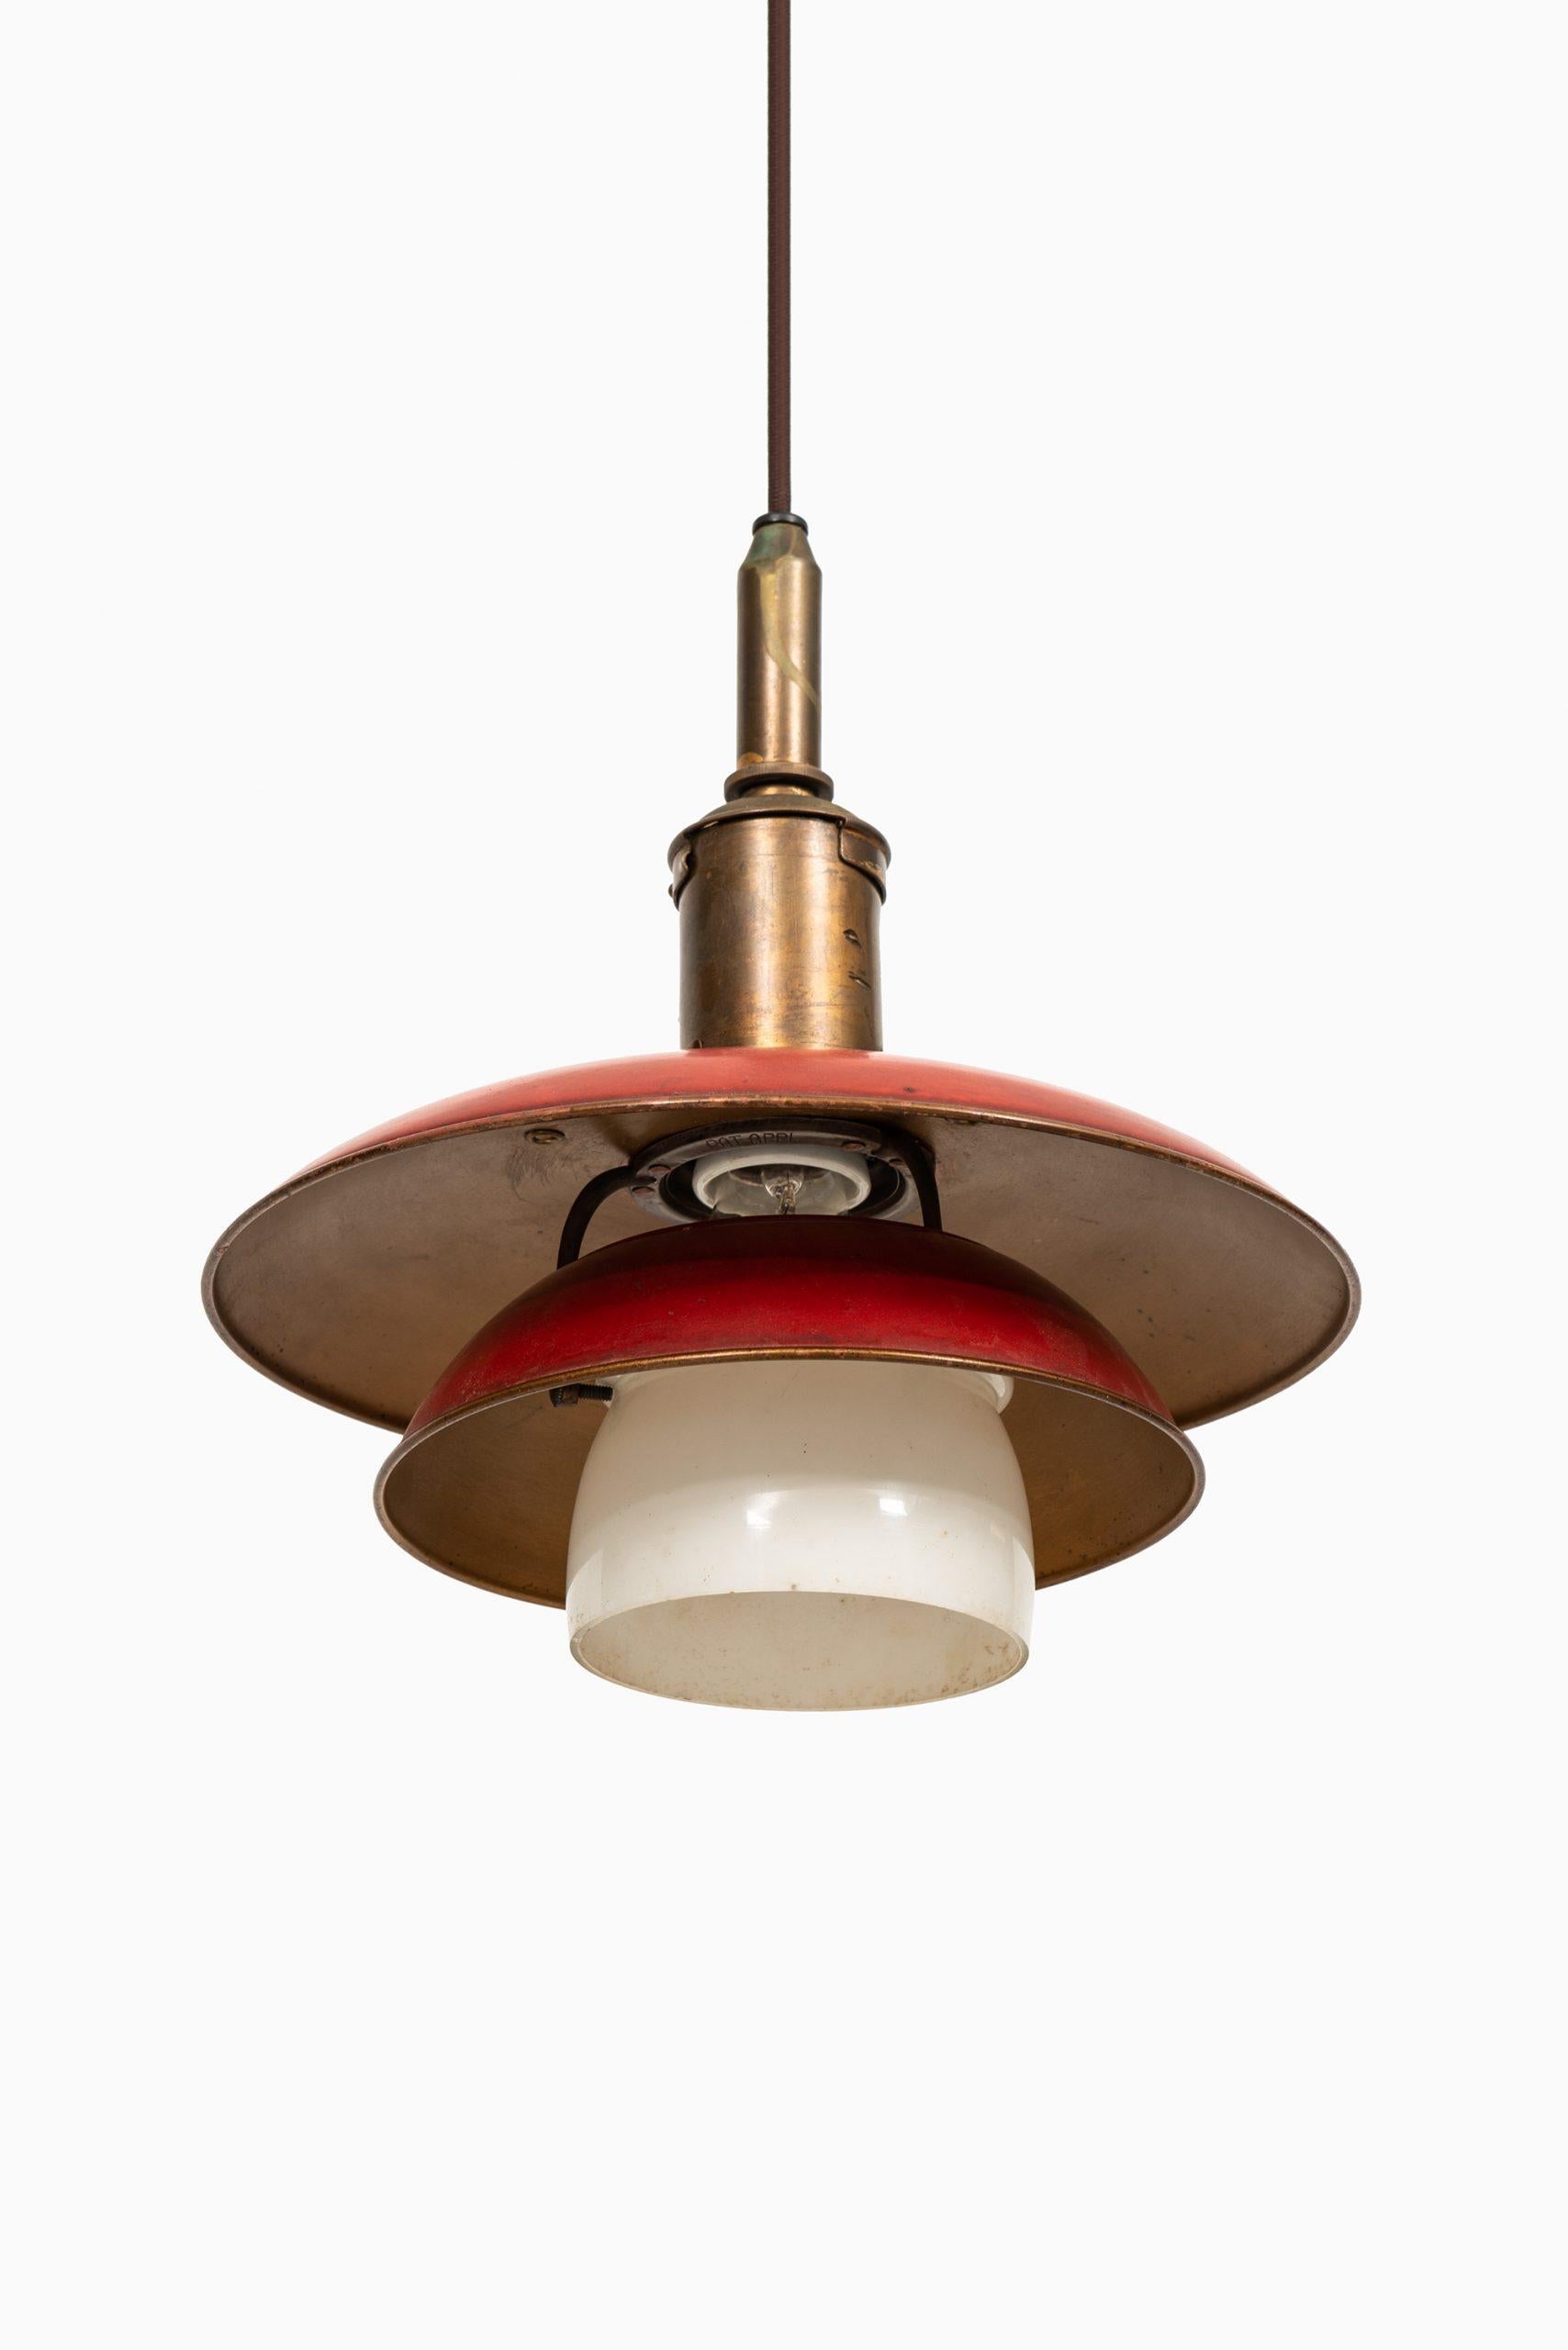 Rare ceiling lamp model PH-3/3 designed by Poul Henningsen. Produced by Louis Poulsen in Denmark. Marked “PAT. APPL”.